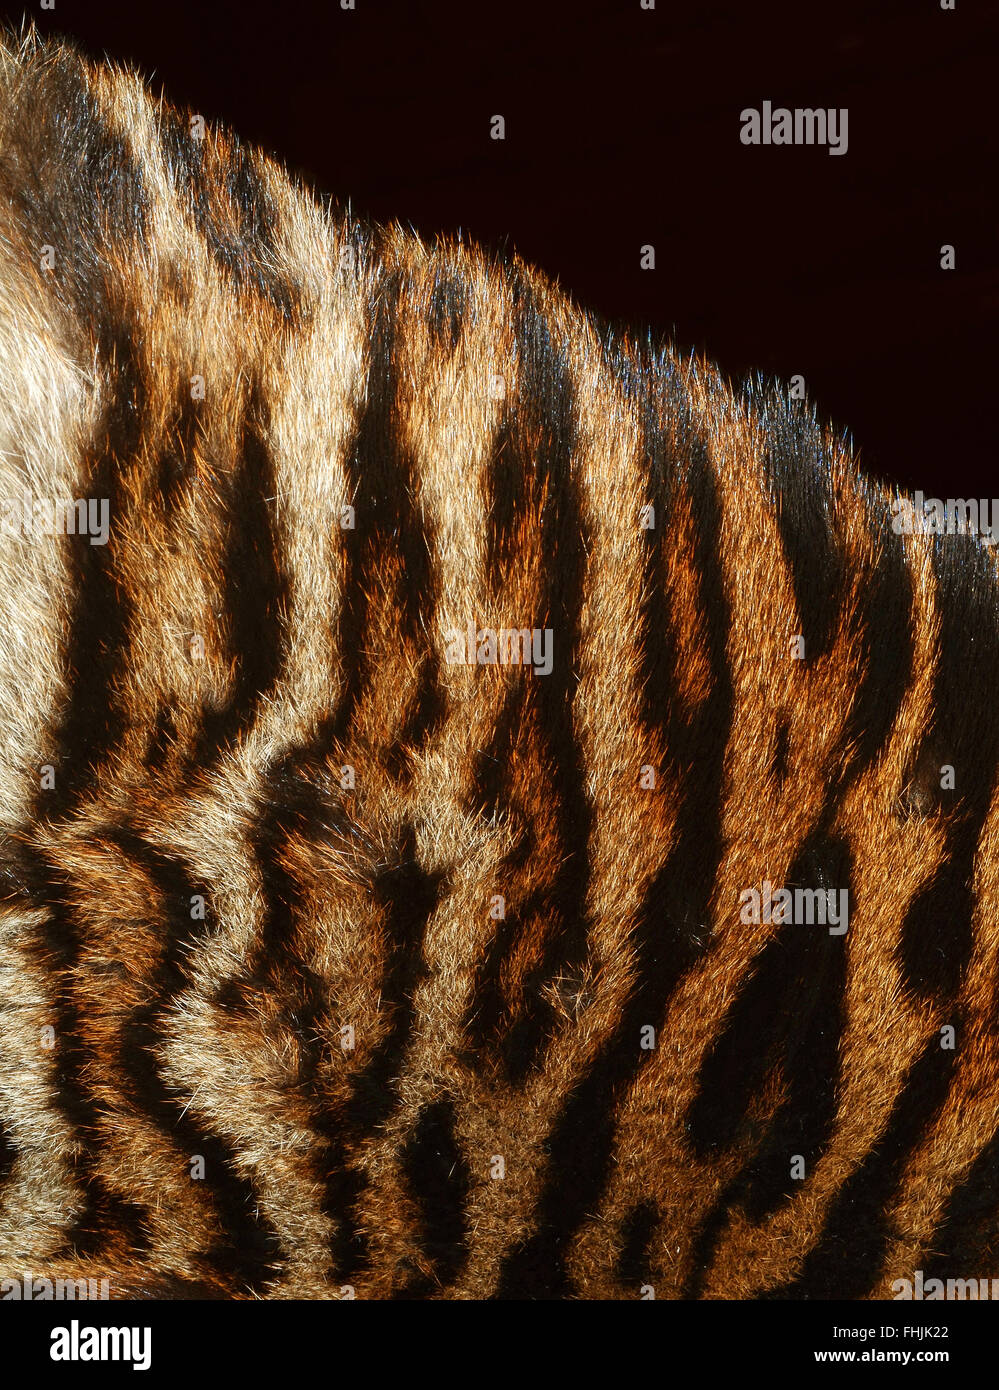 siberian tiger fur Stock Photo